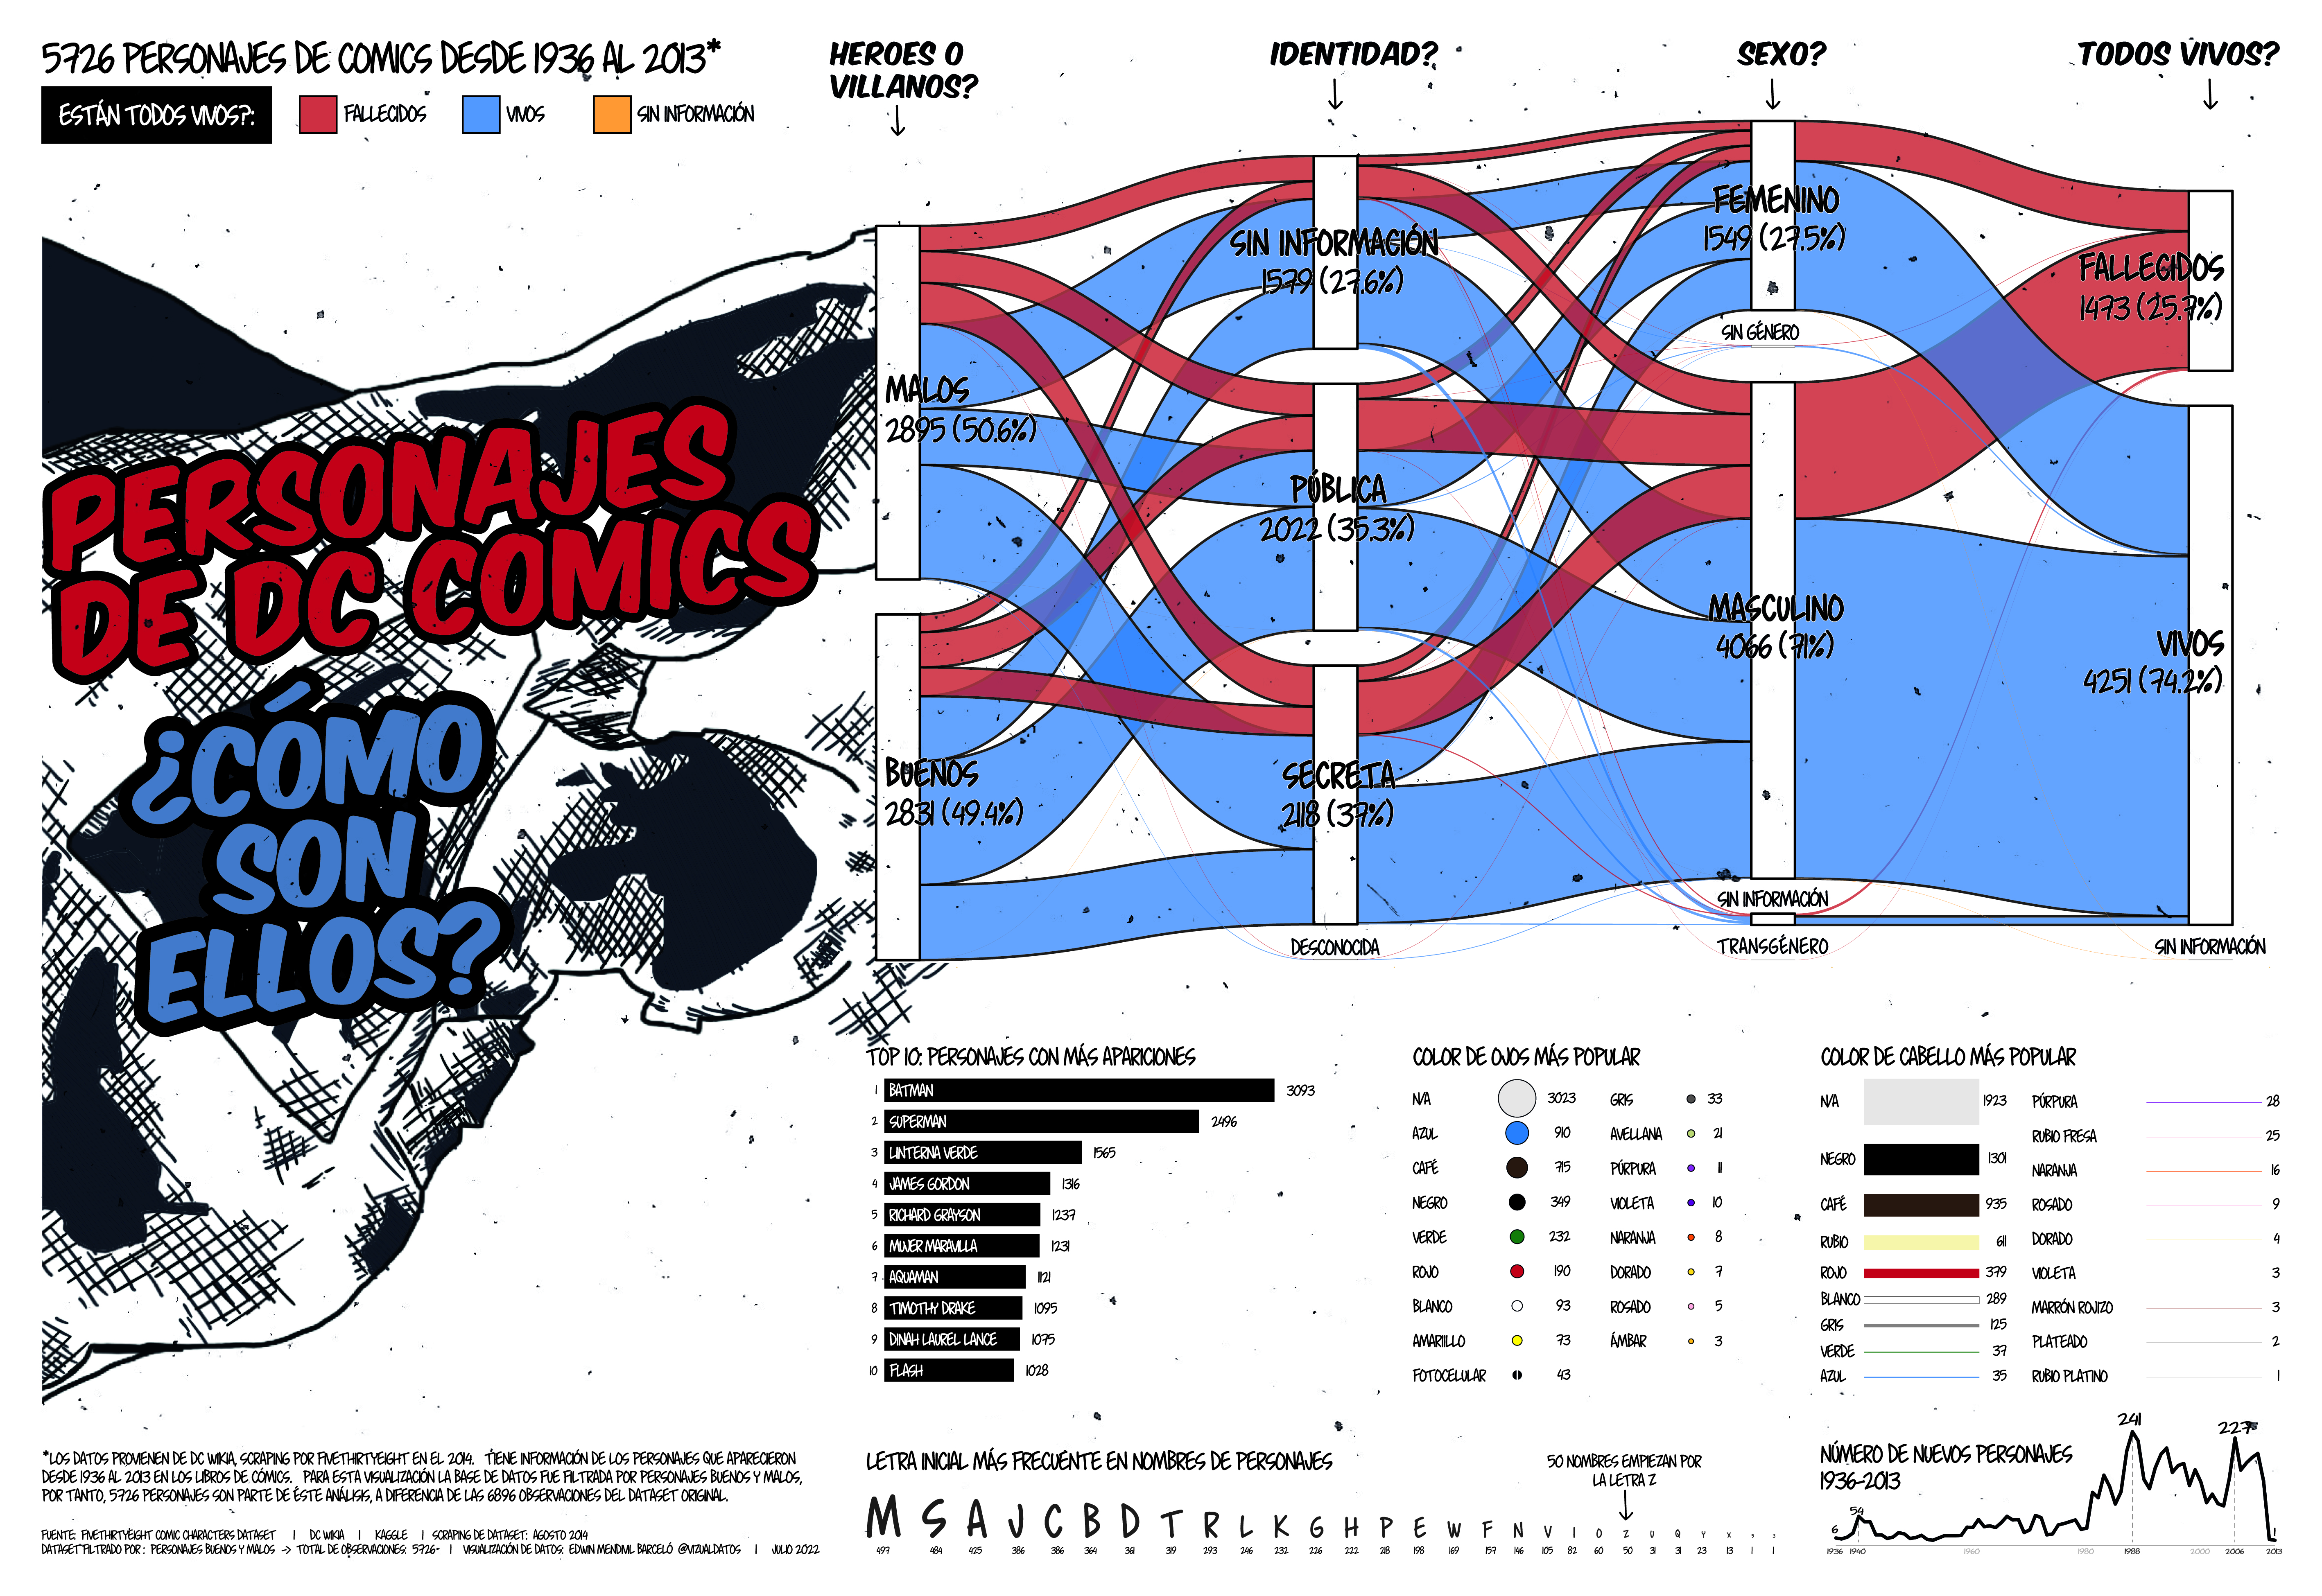 Vizualización sobre rasgos físicos de personajes de DC Comics